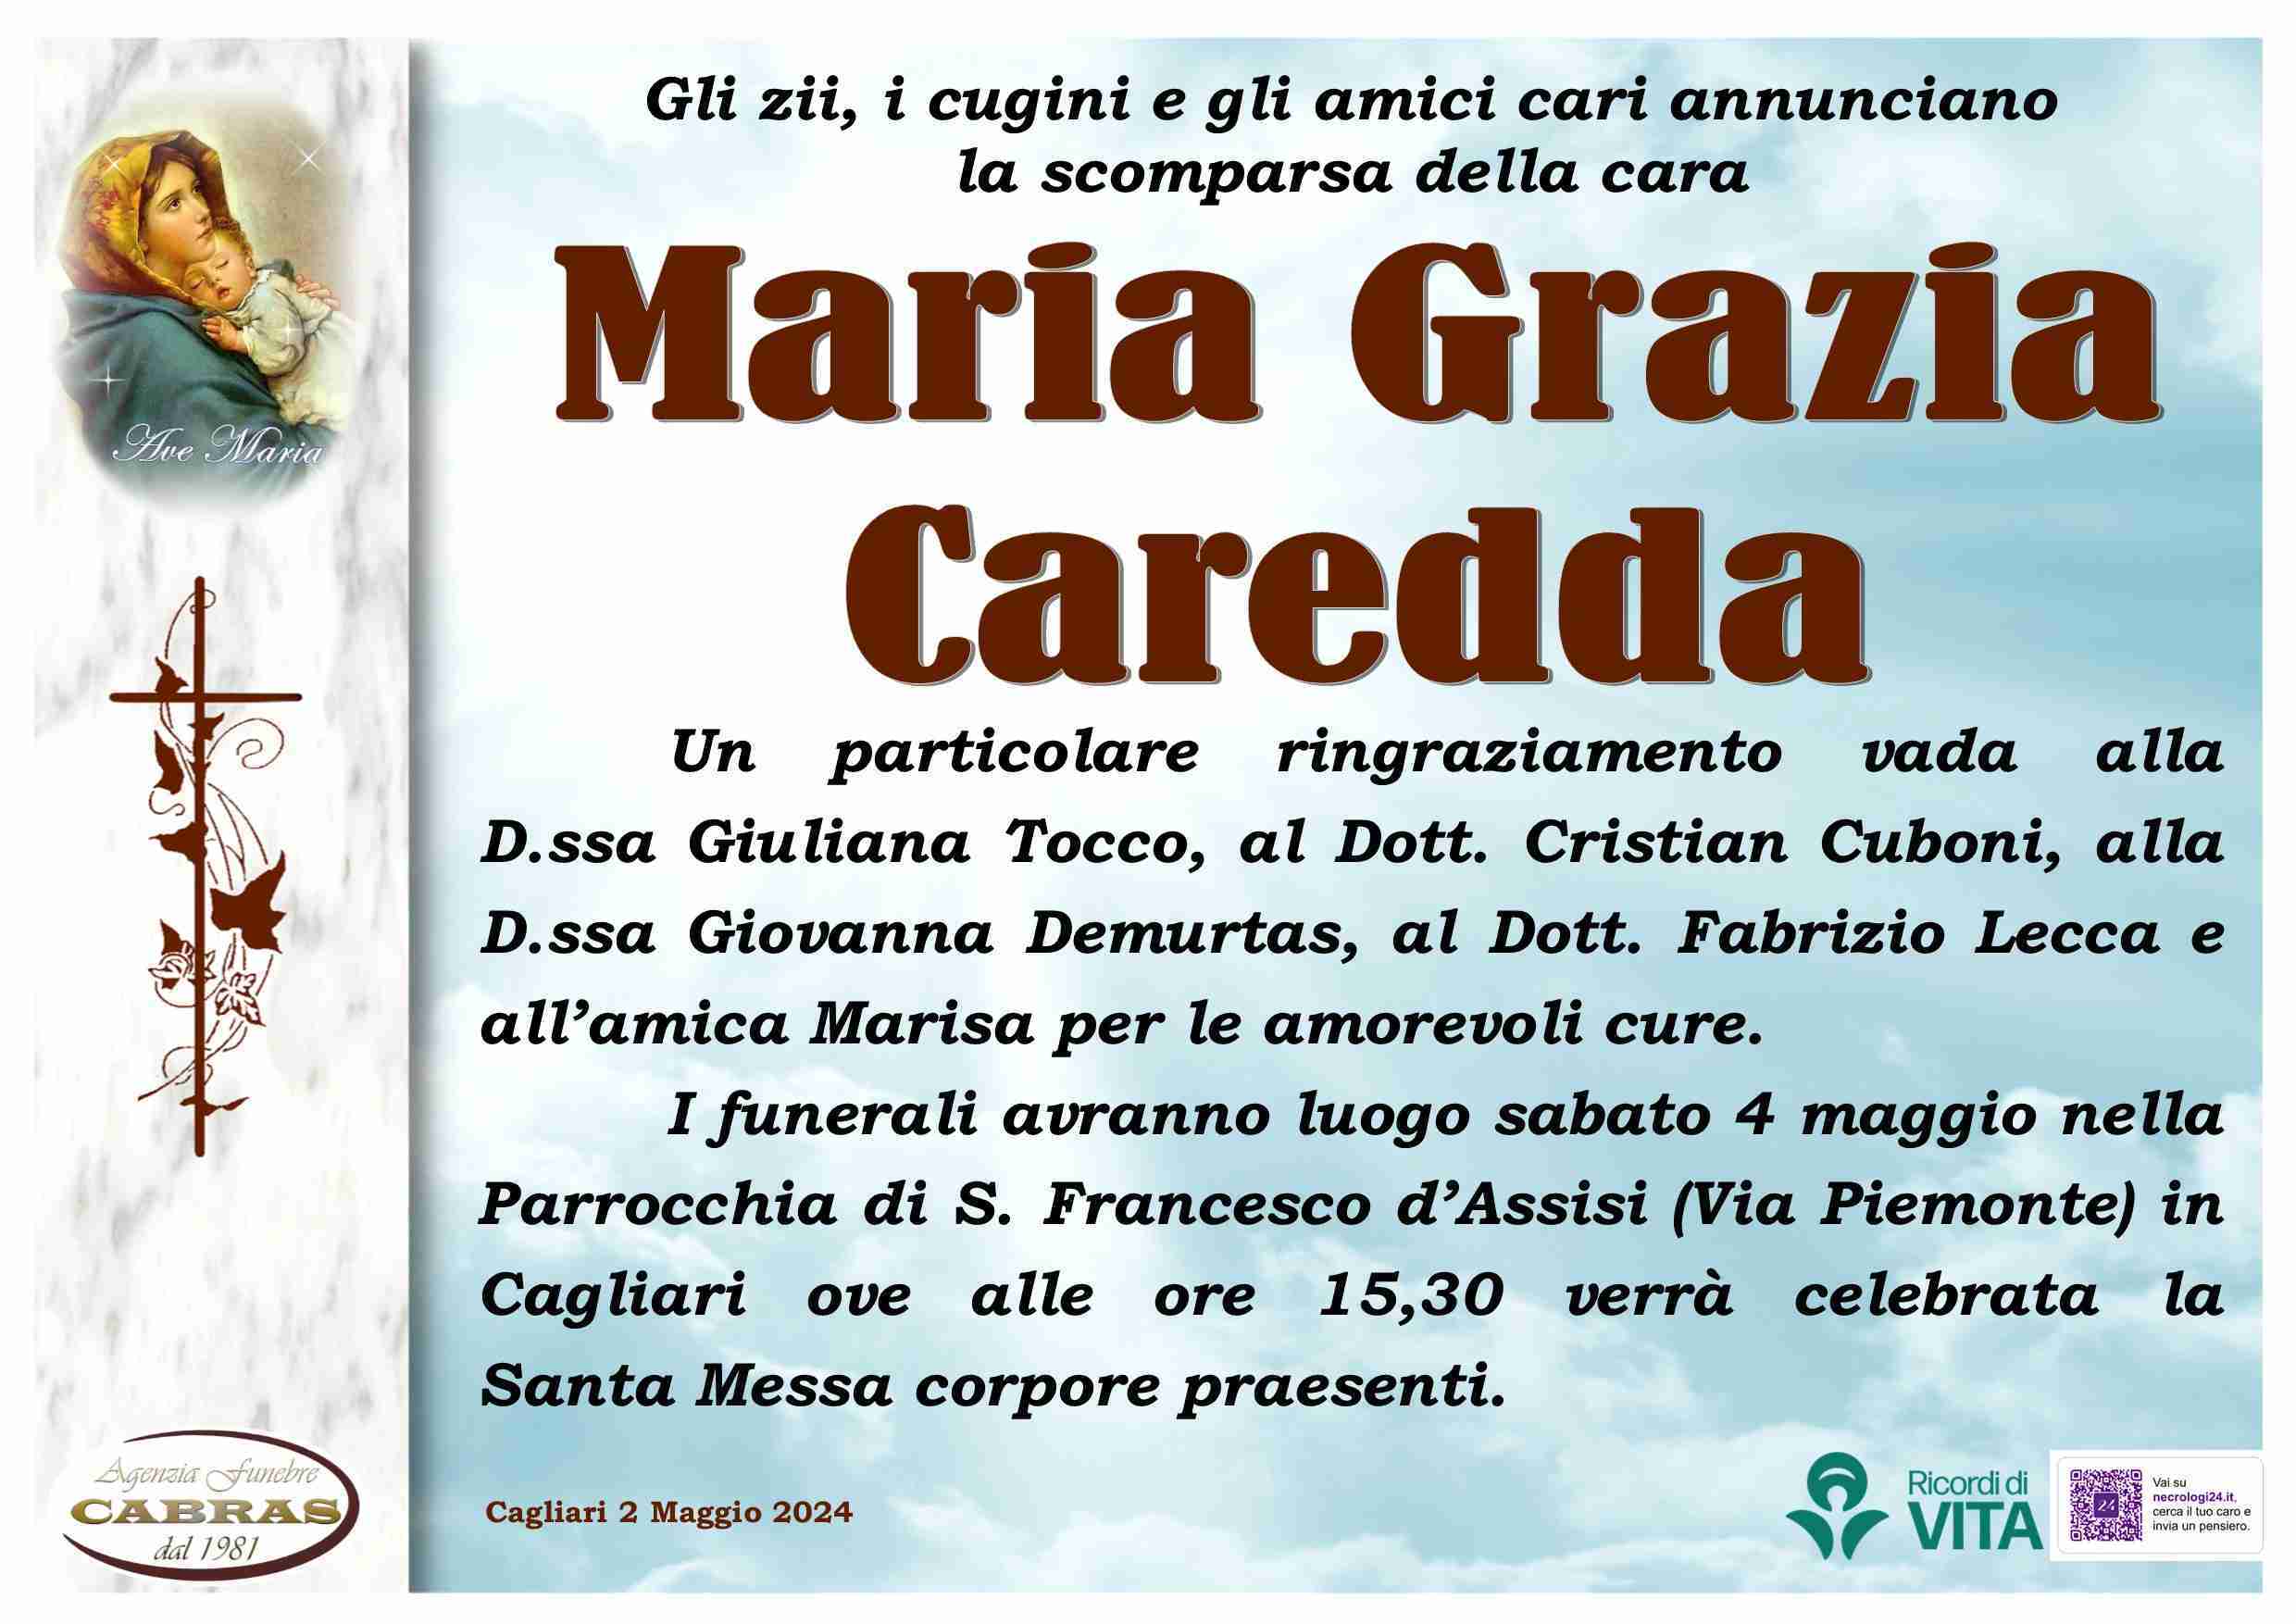 Maria Grazia Caredda